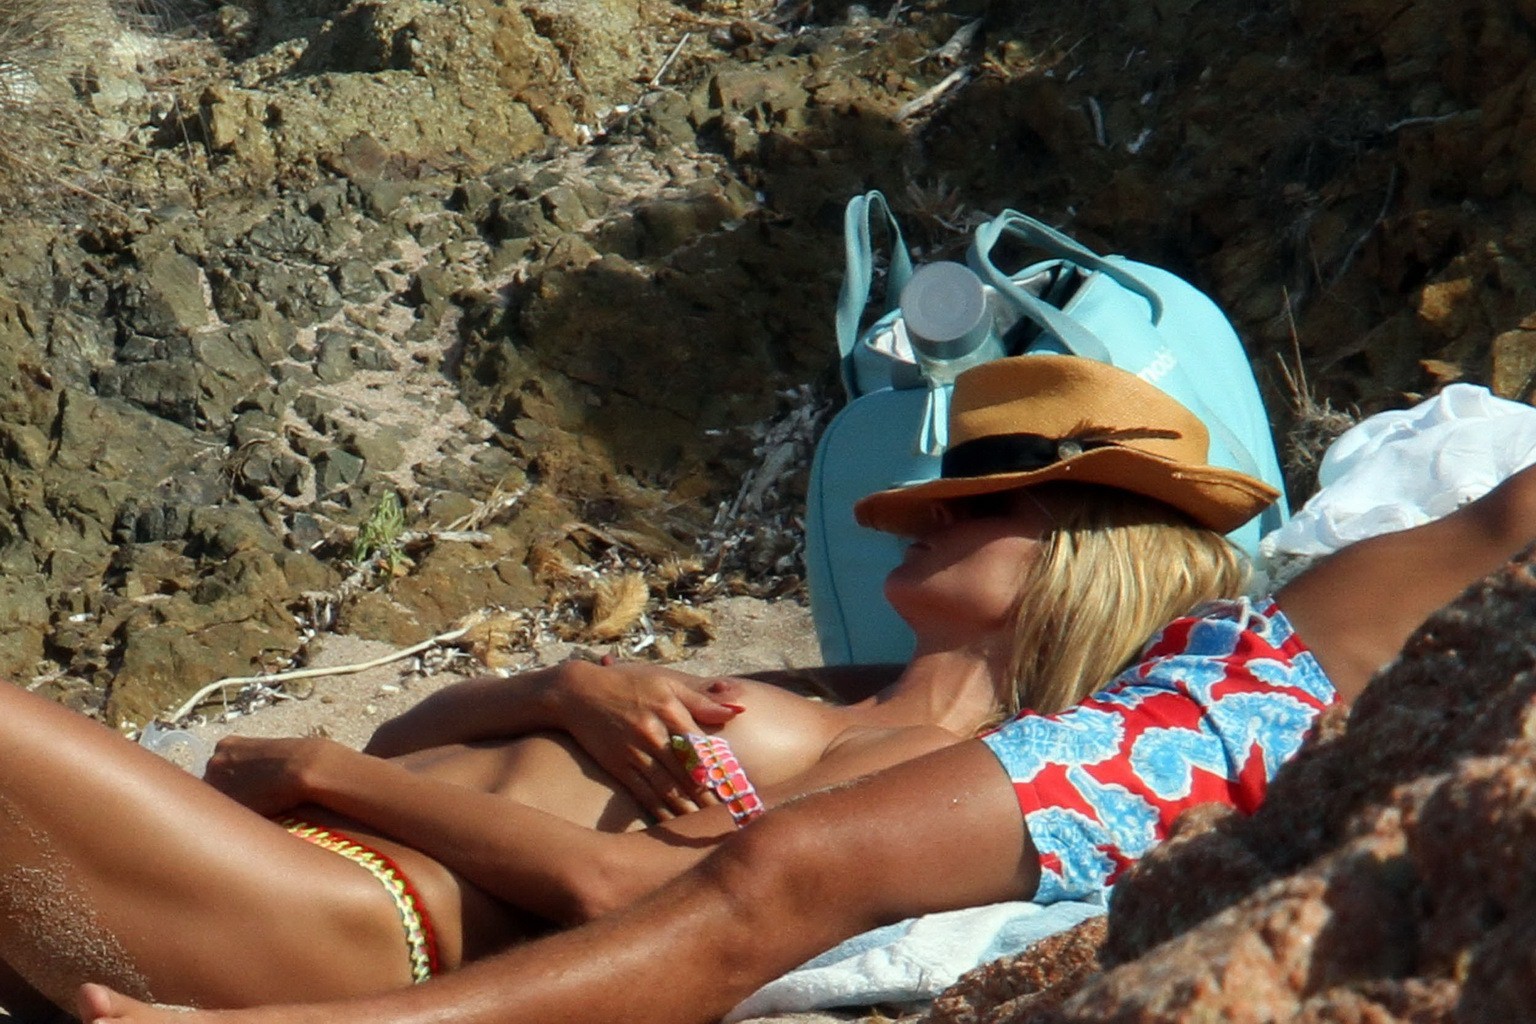 Heidi Klum tanning topless and groping at the beach #75156607